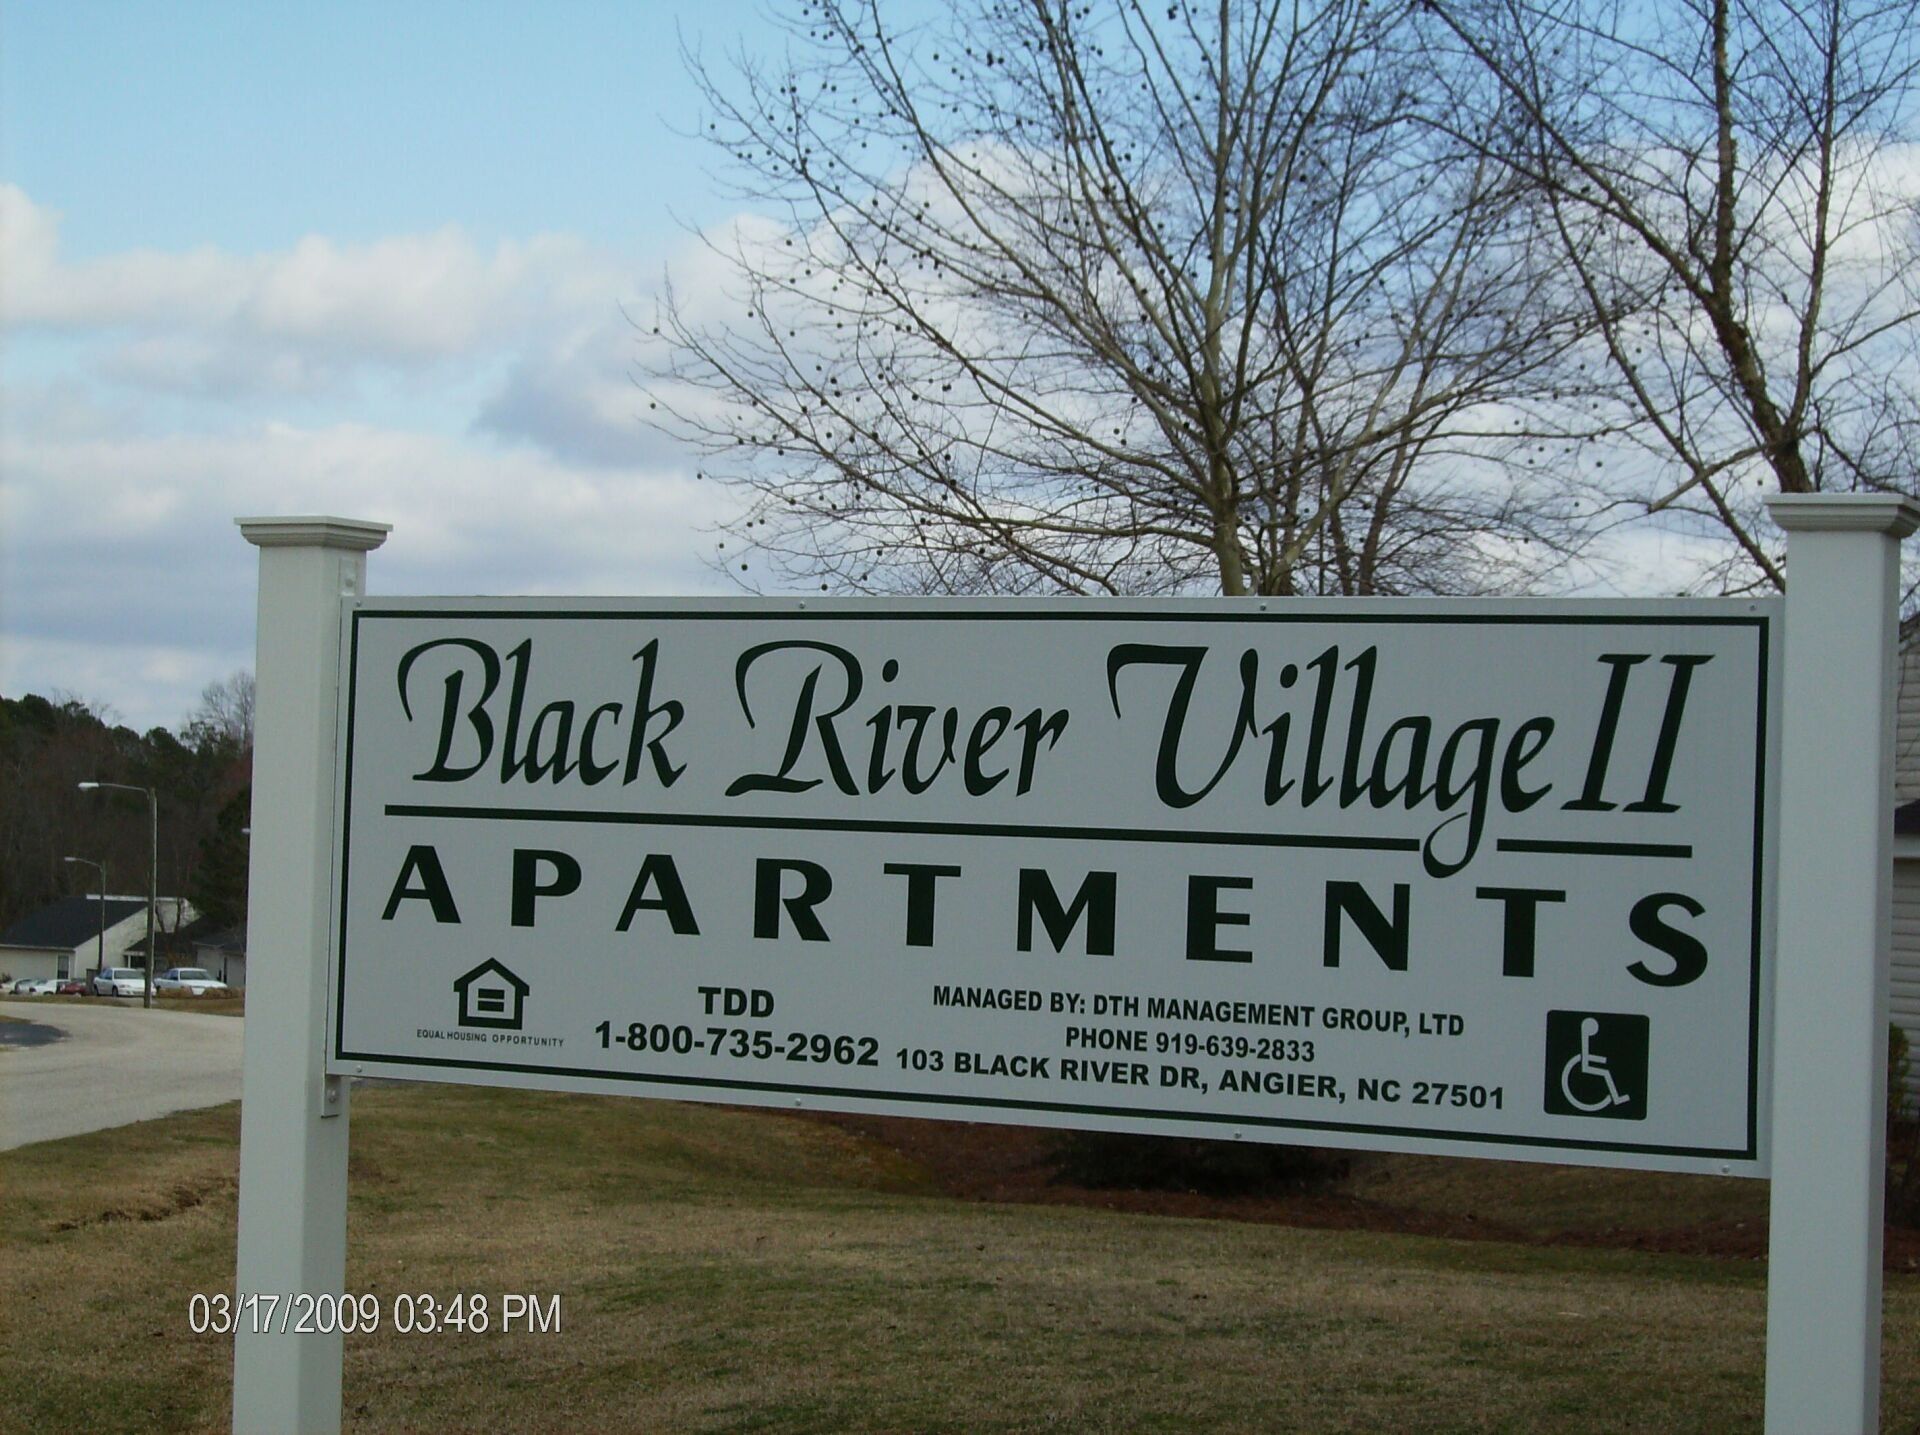 Black River Village II